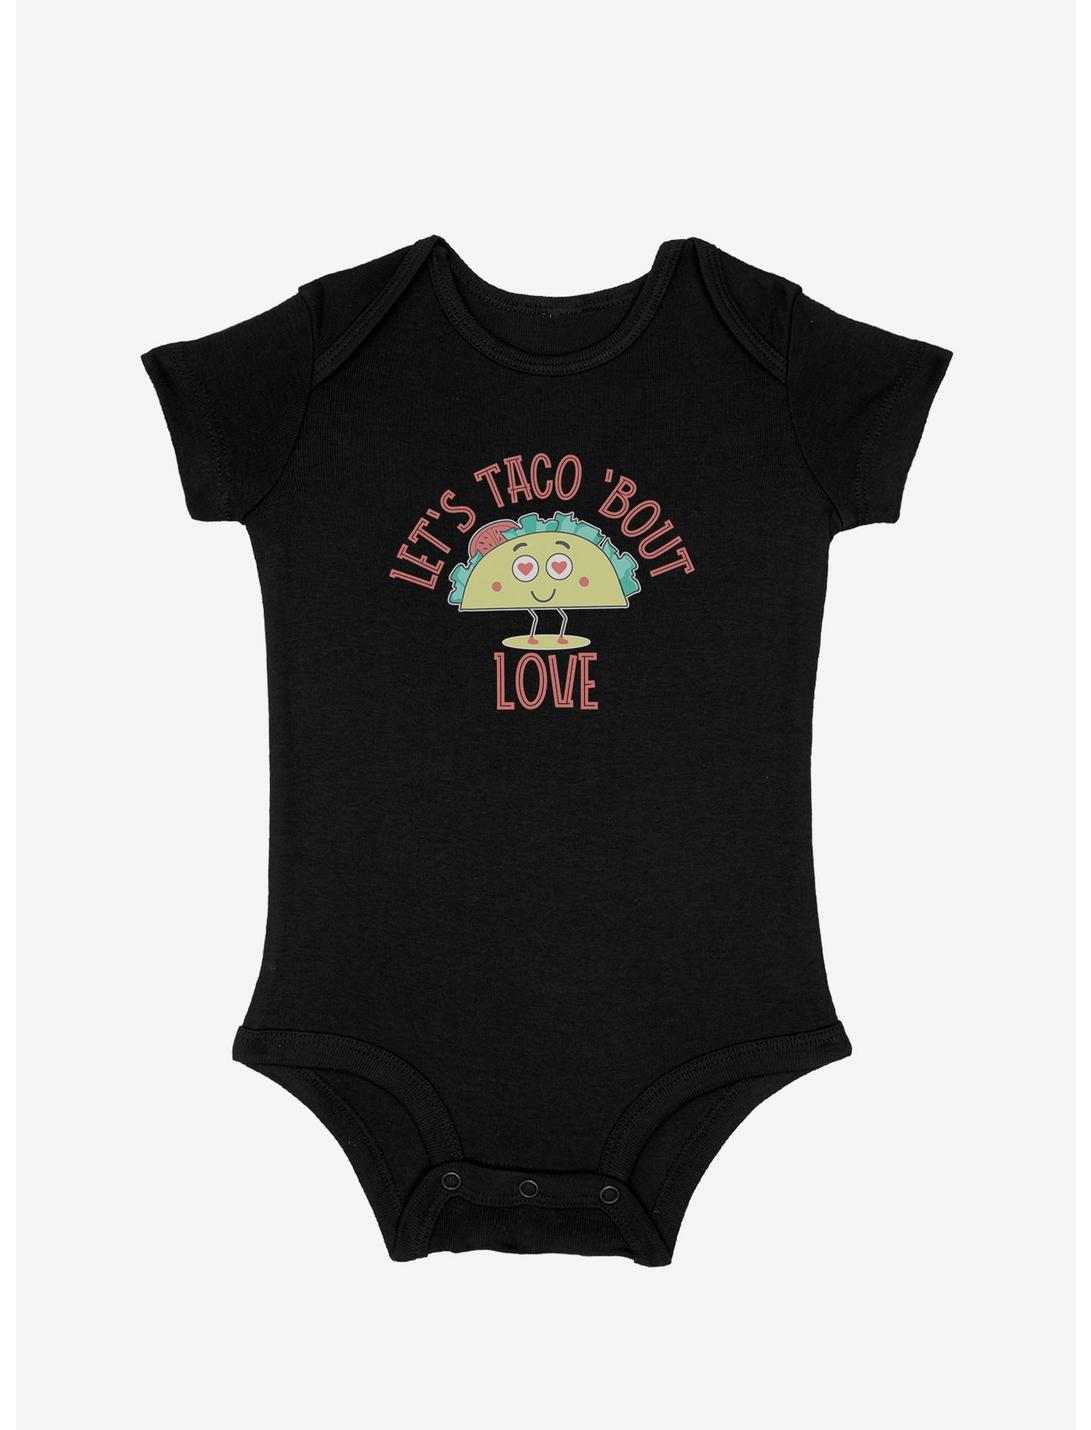 Let's Taco 'Bout Love Infant Bodysuit, BLACK, hi-res